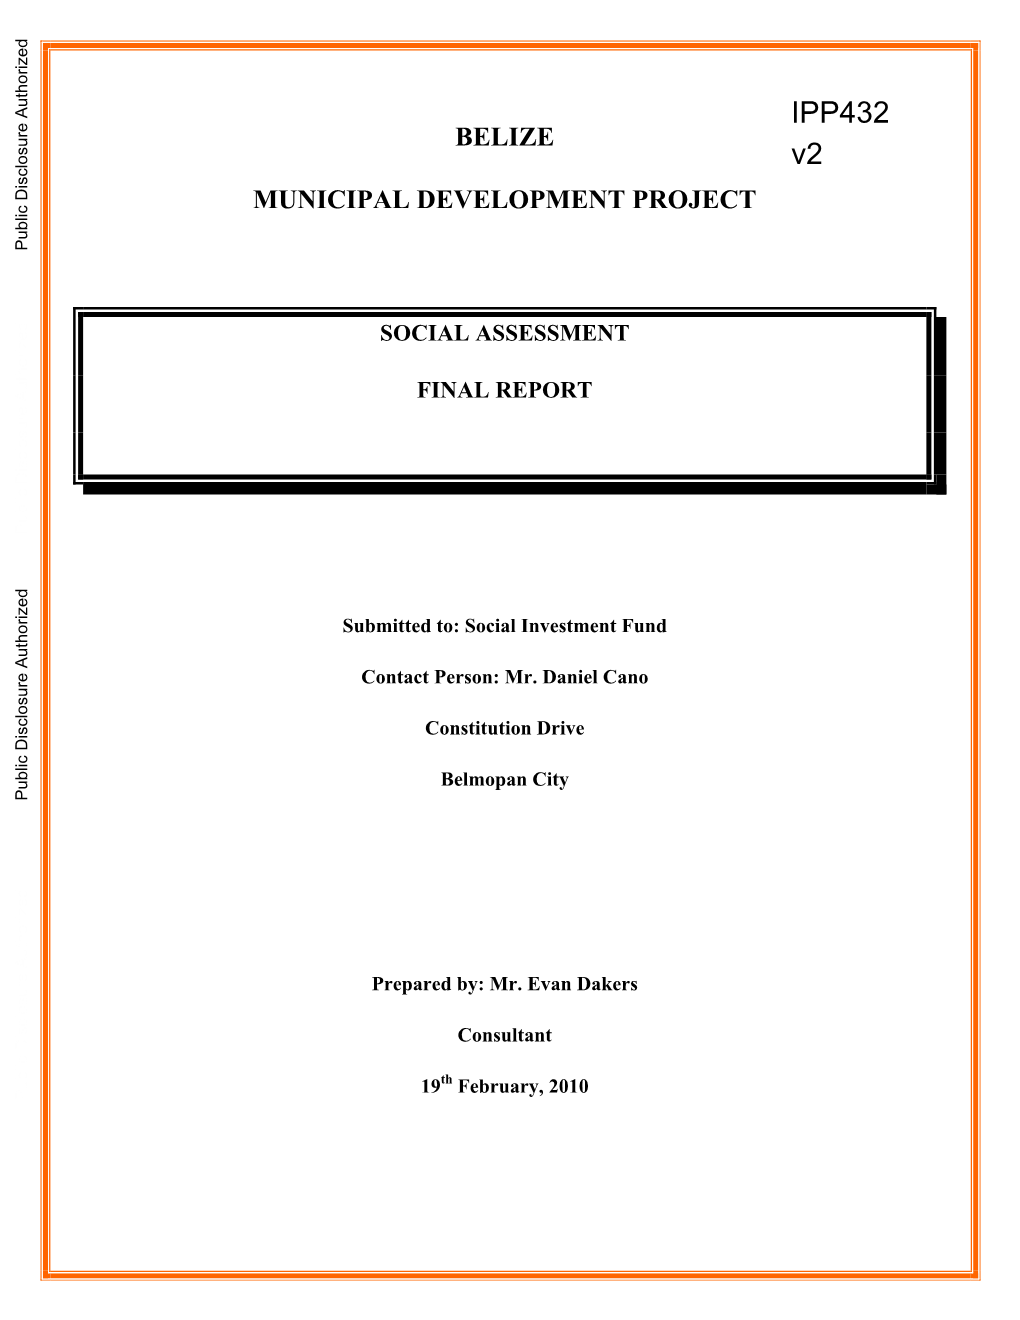 Belize Municipal Development Project